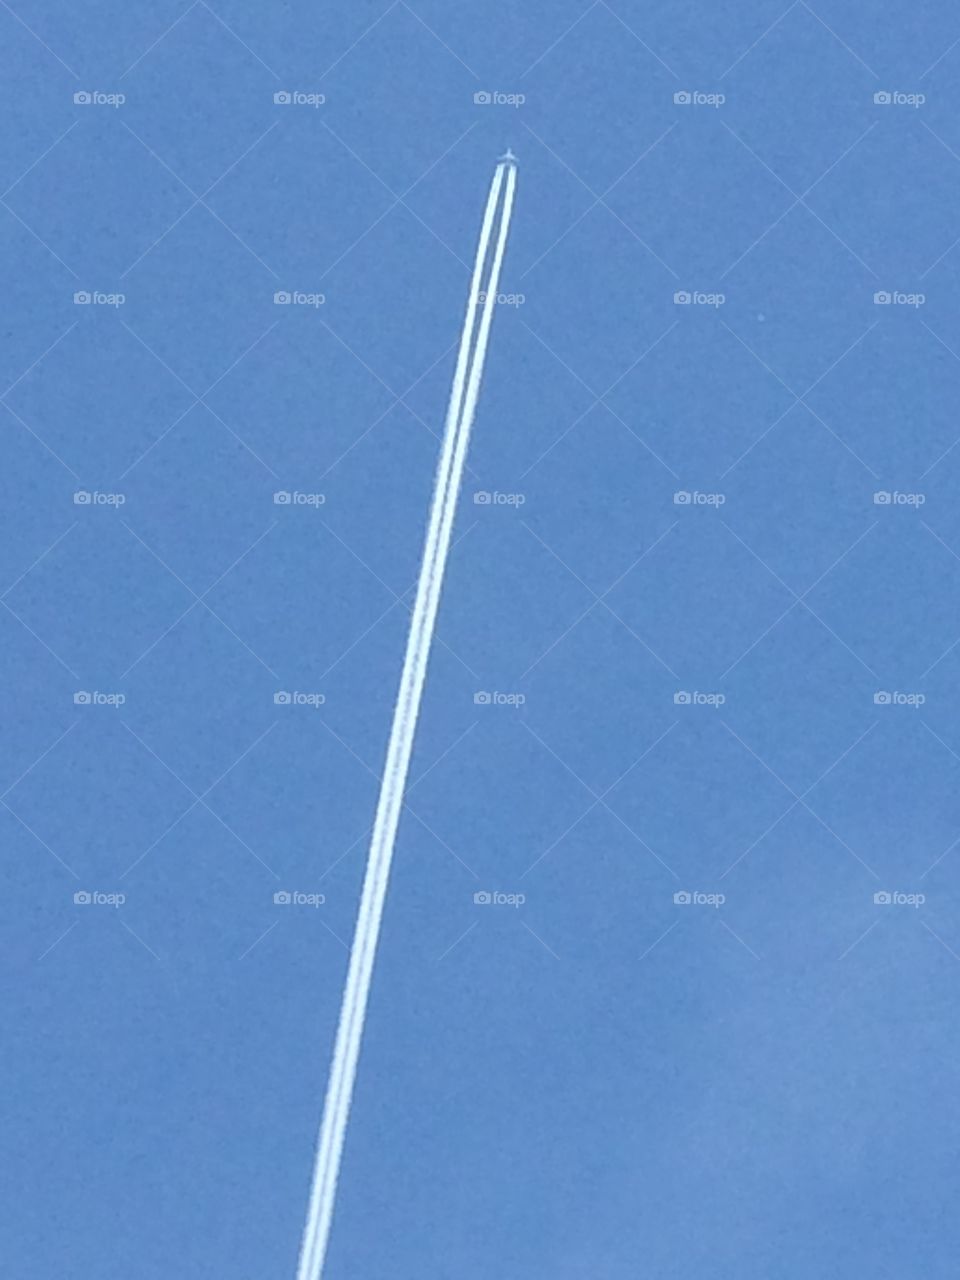 Plane in a blue sky 